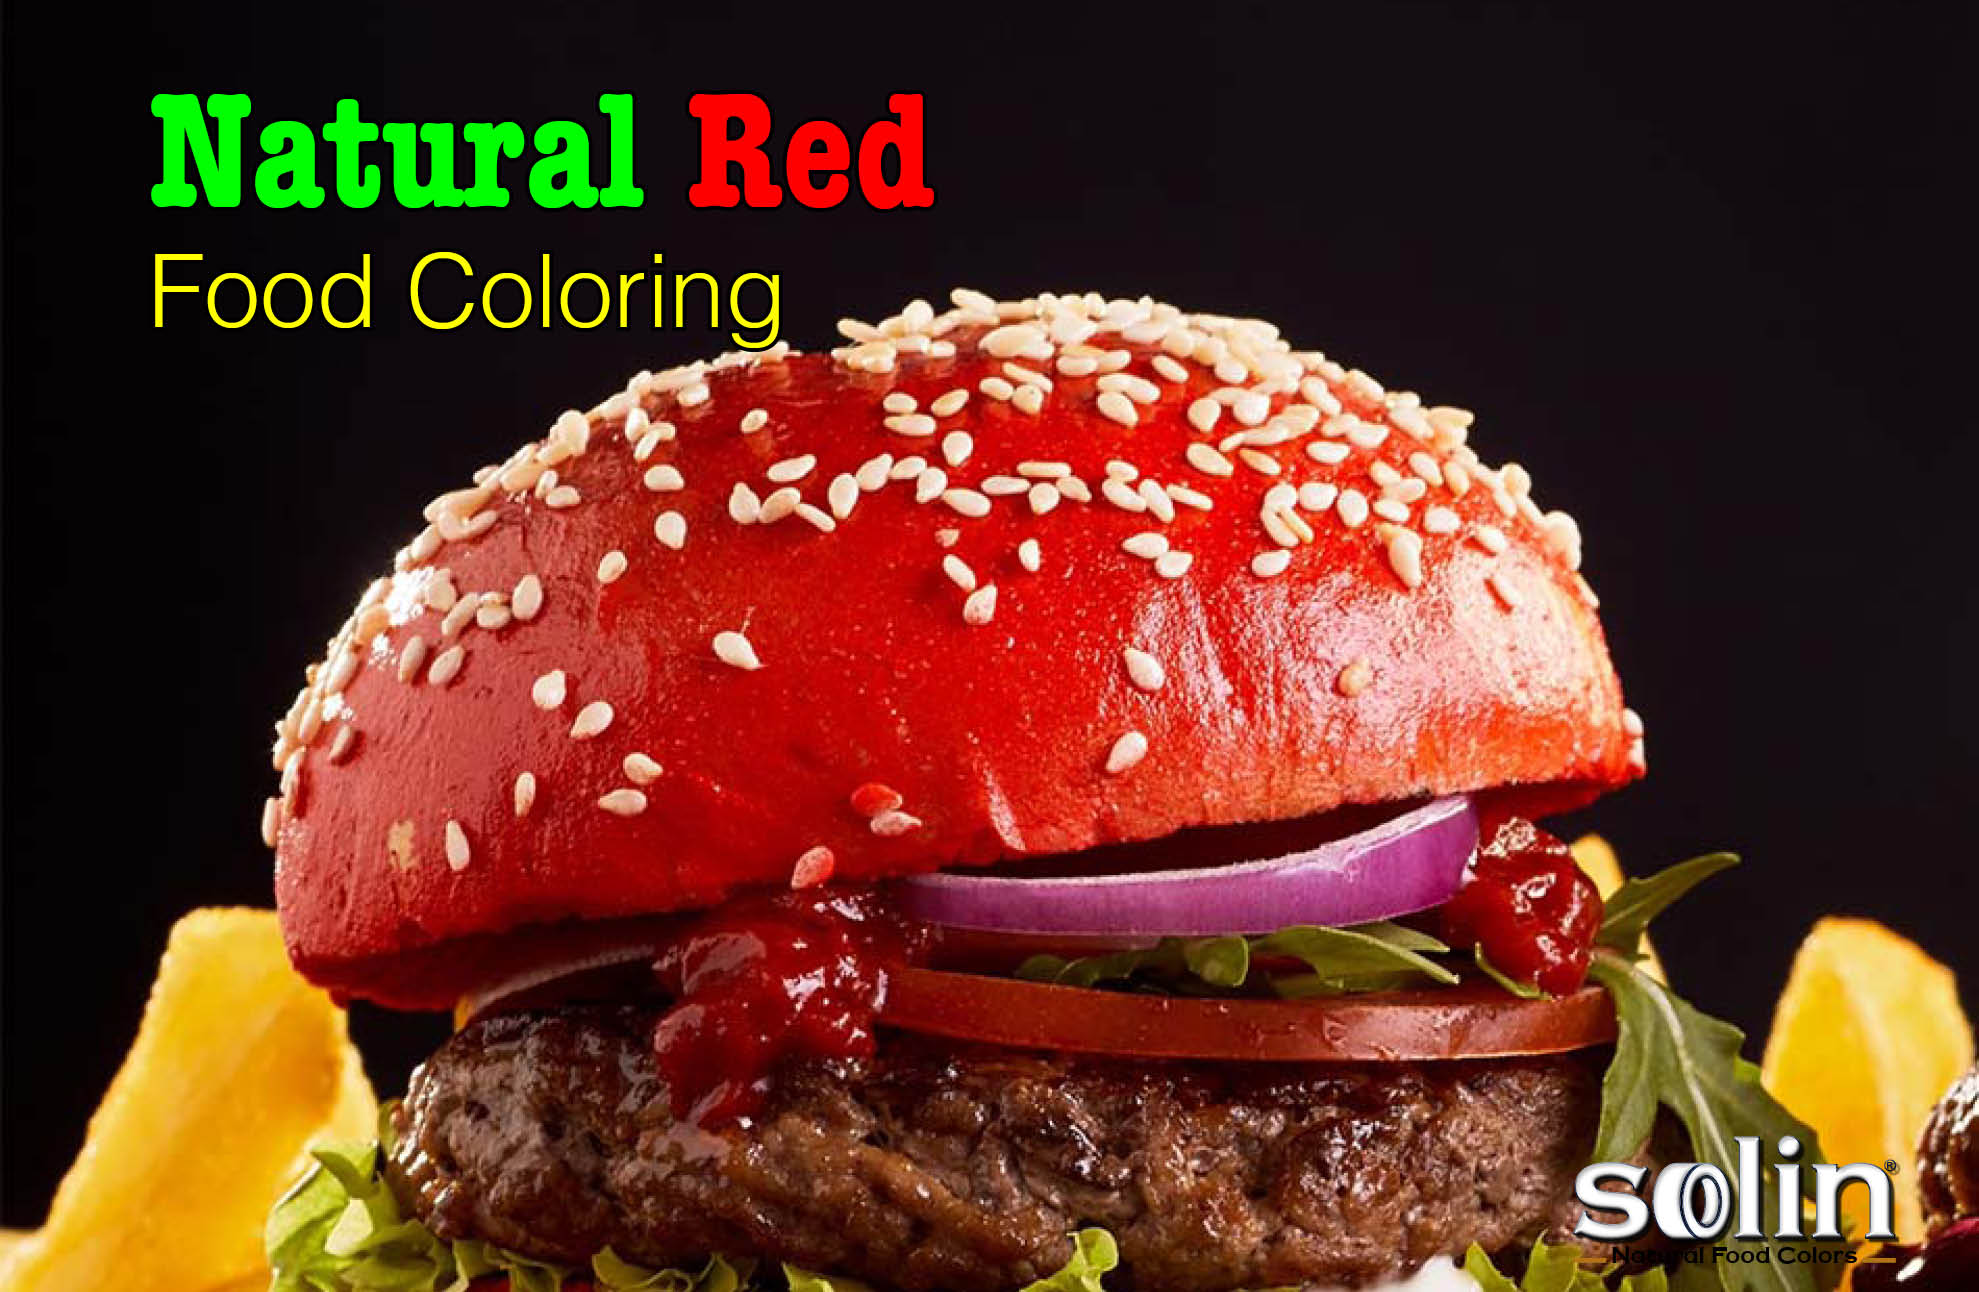 Solin Natural Red Food Coloring